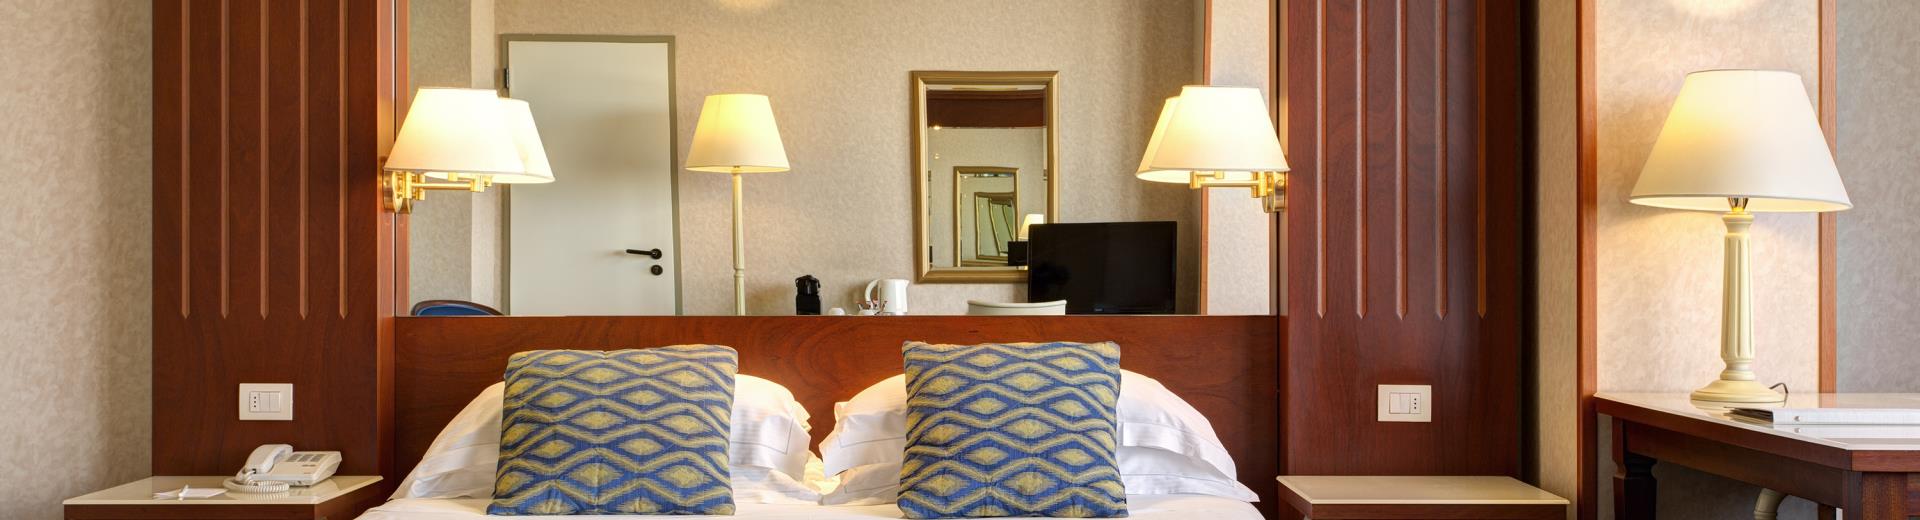 Executive Room - CTC Hotel Verona 4 star hotel